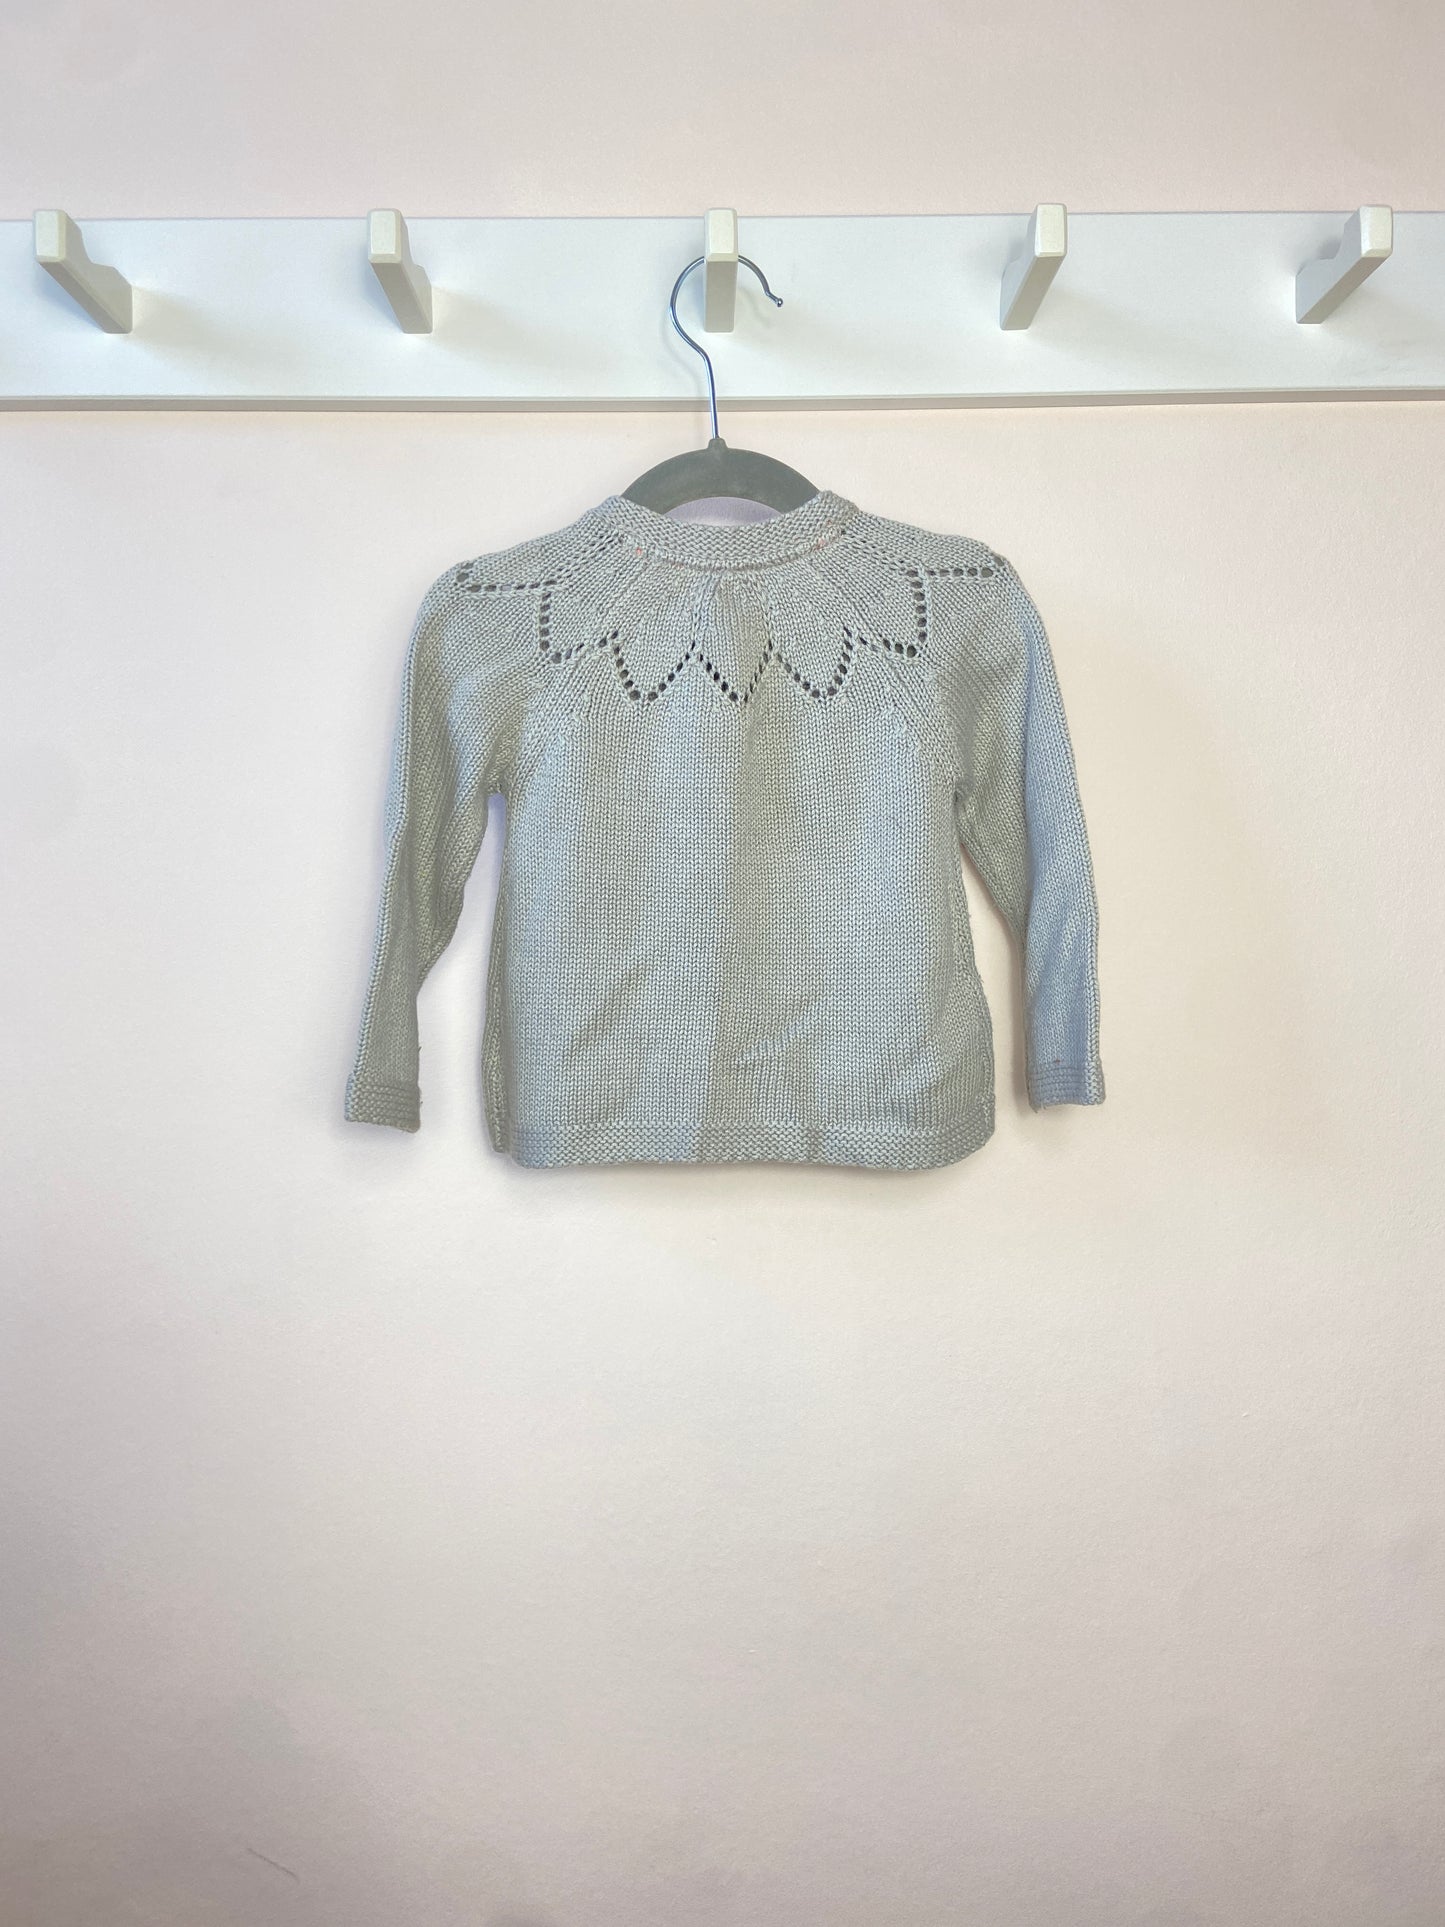 6-12 M Grey knitted cardigan